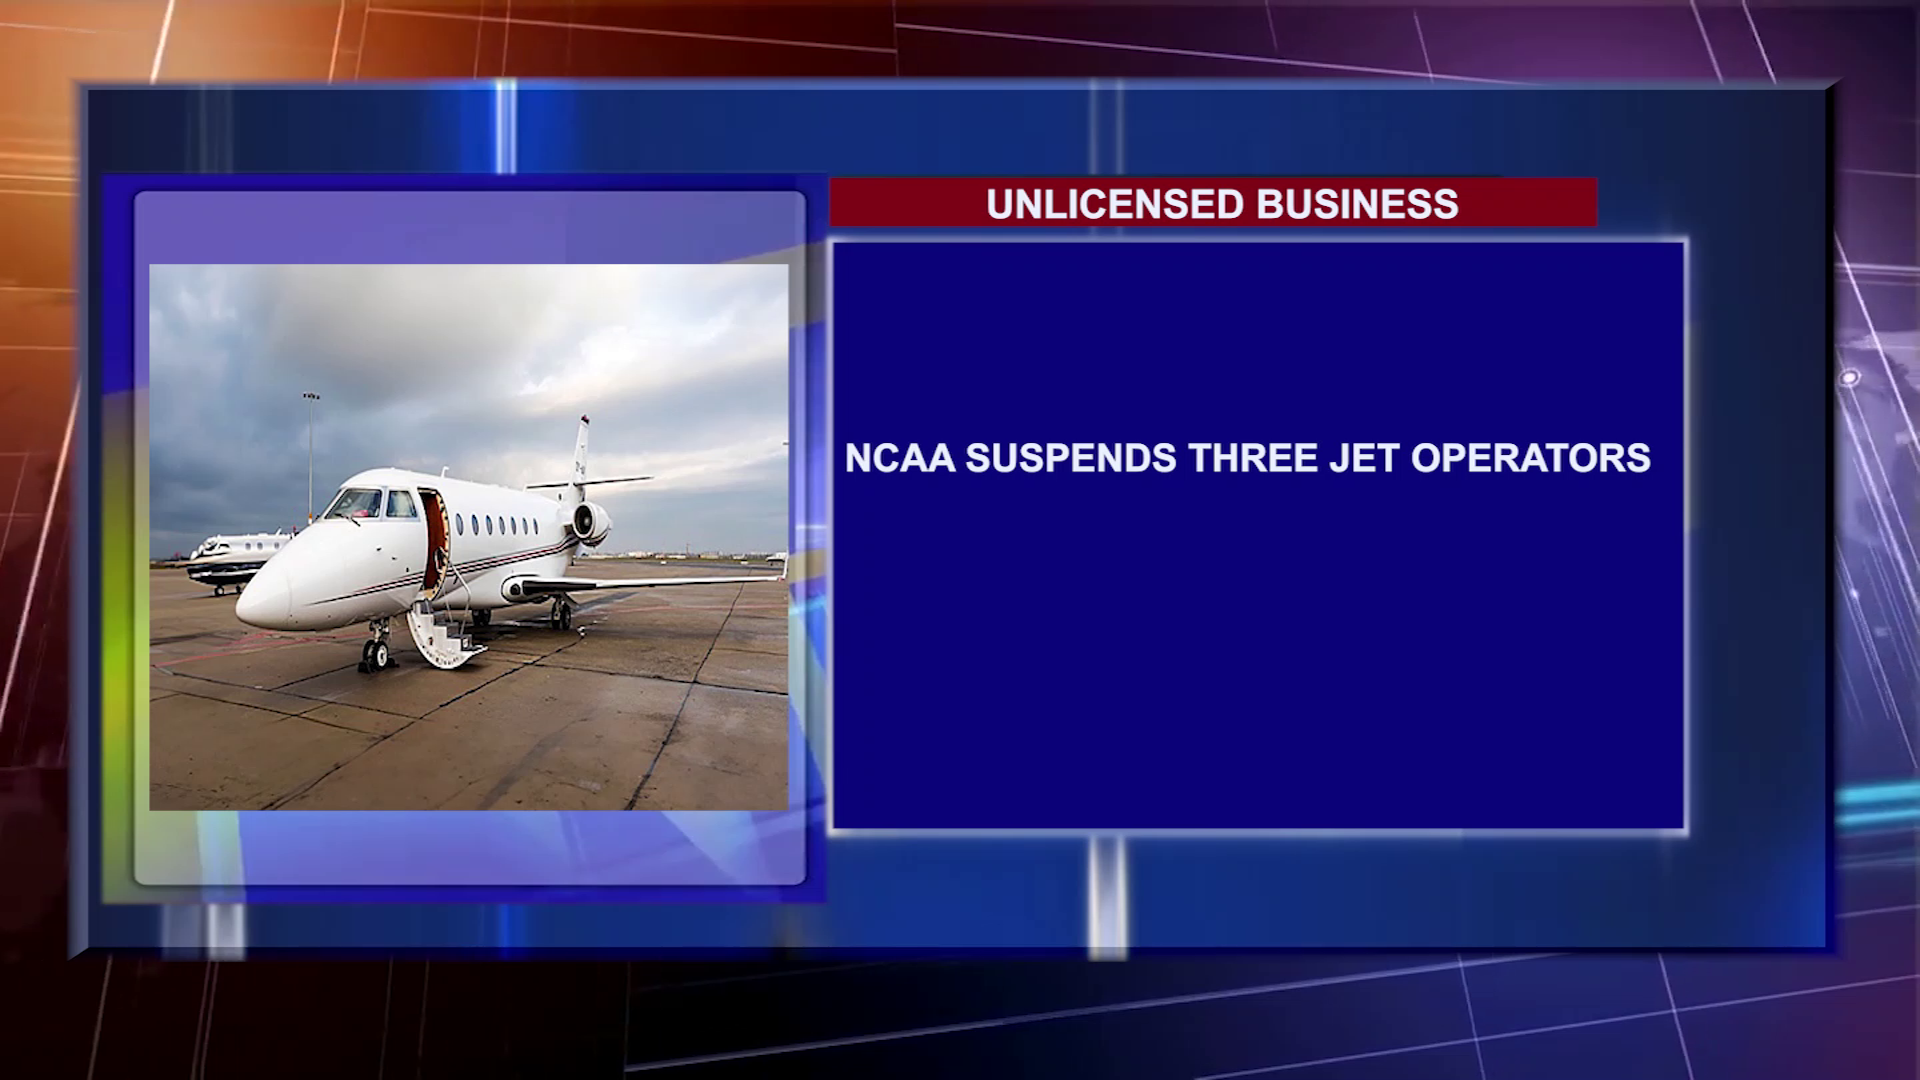 Unlicensed Business: NCAA Suspends Three Jet Operators